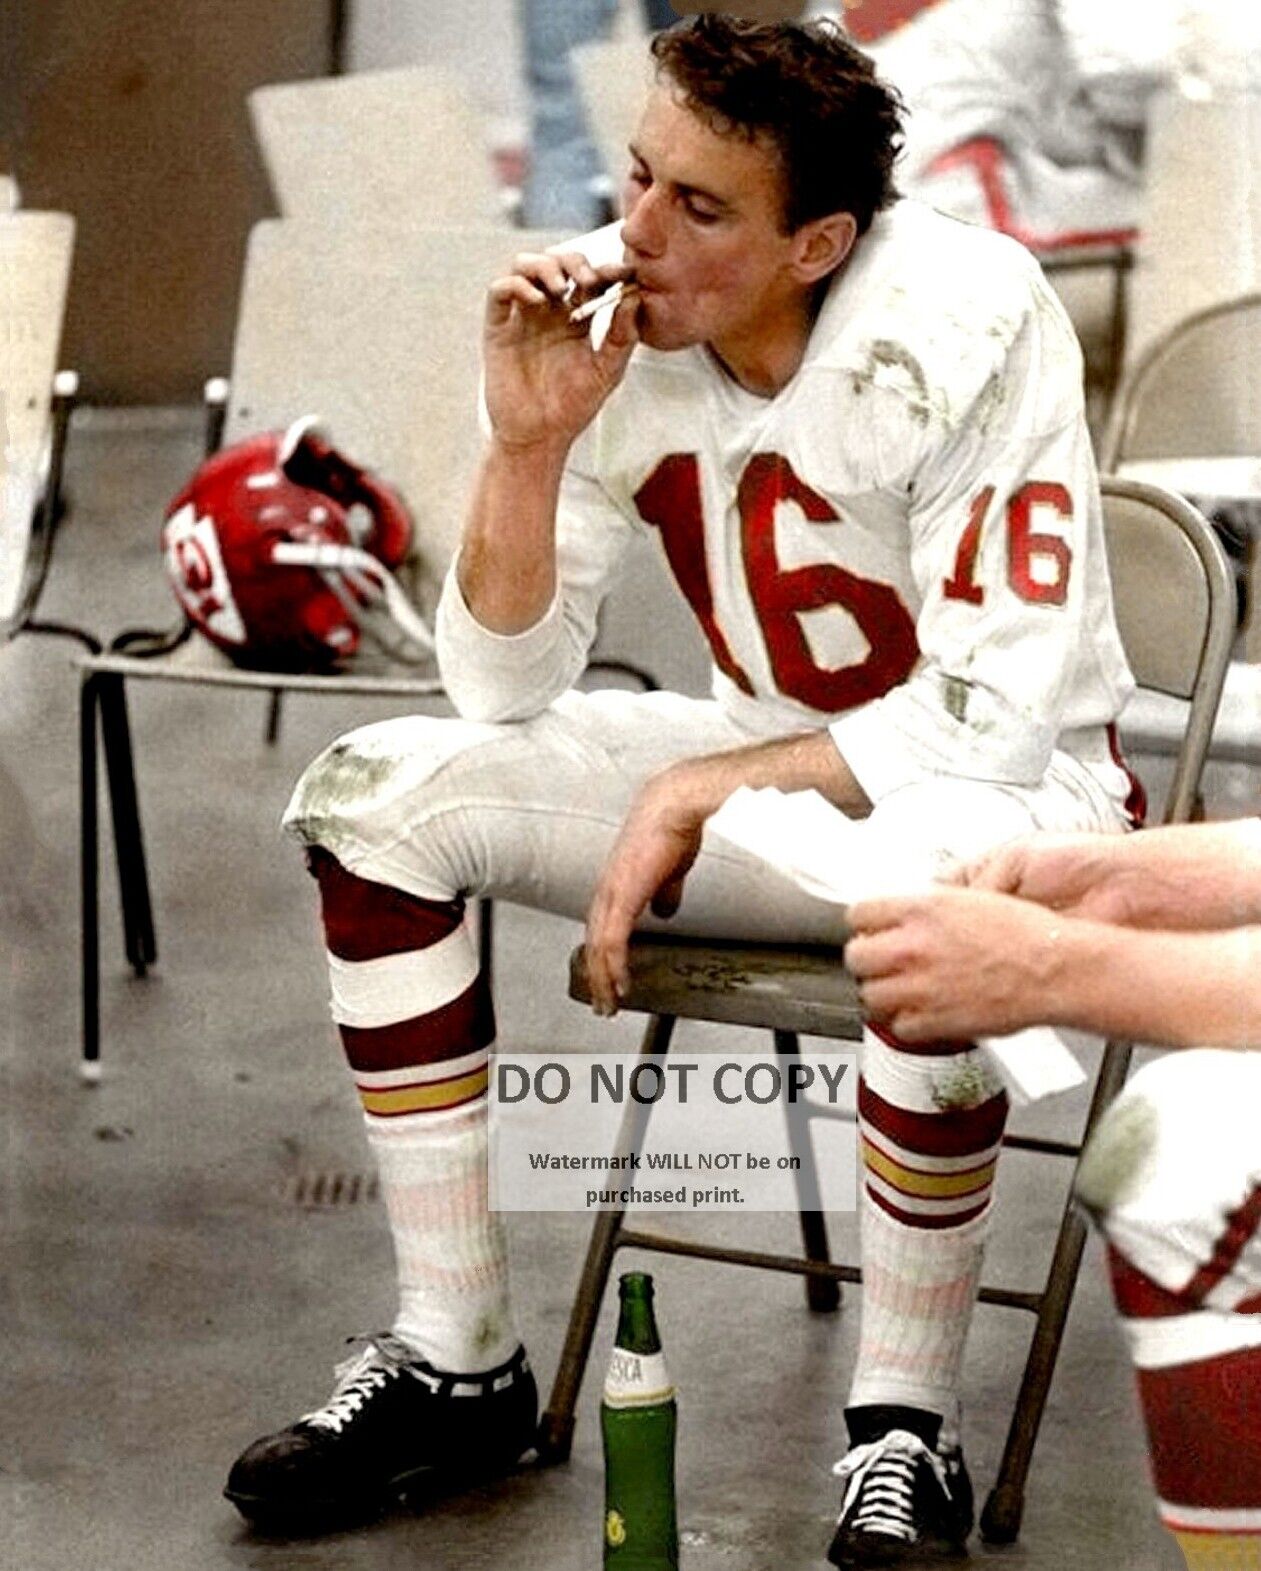 QB LEN DAWSON SMOKING A CIGARETTE AND DRINKING A FRESCA - 8X10 PHOTO (AZ323)